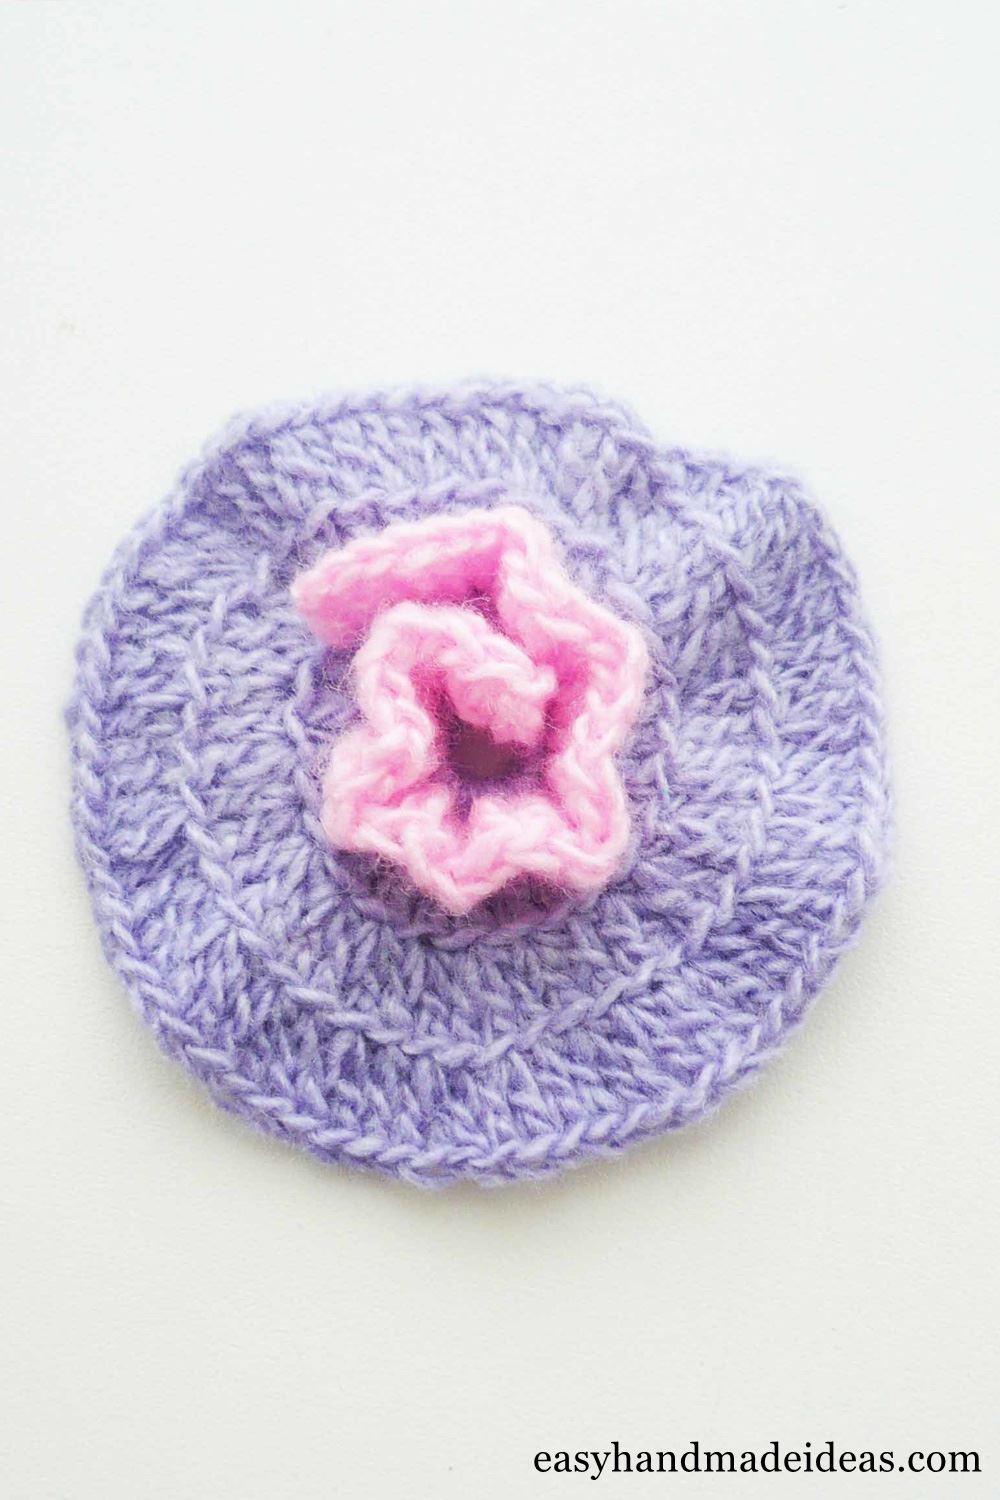 A half crocheted pink flower